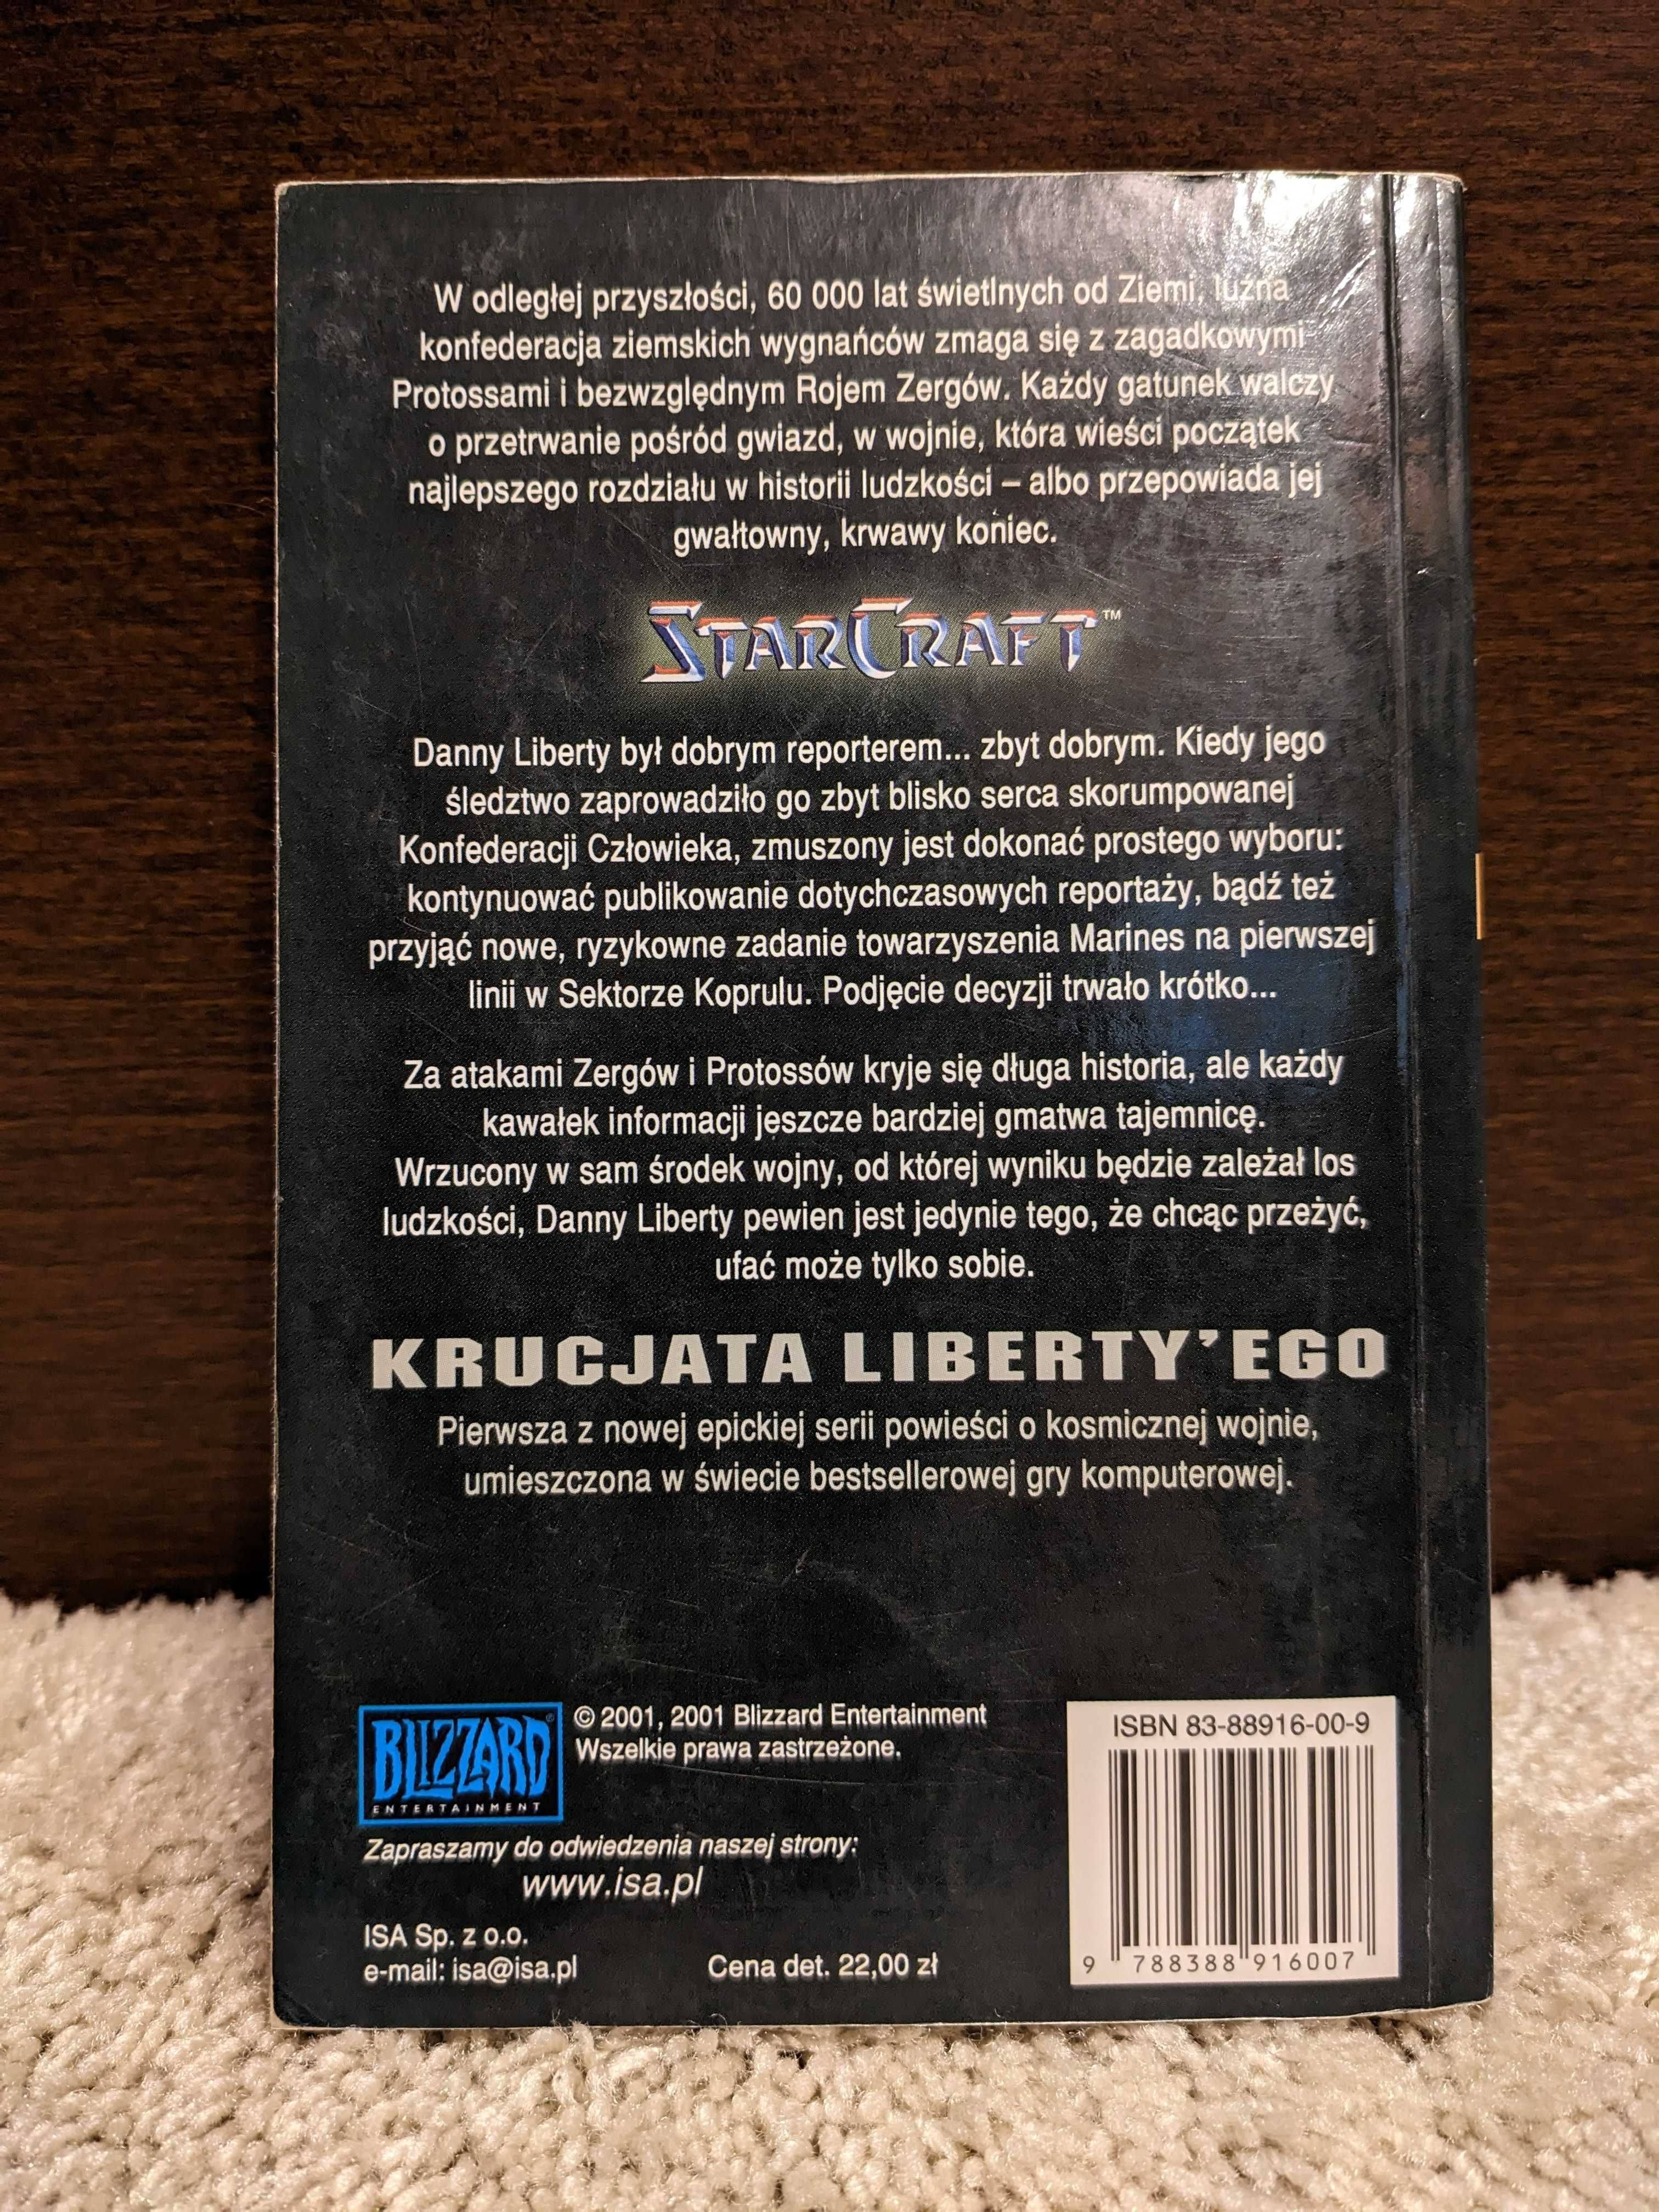 Blizzard StarCraft Krucjata Liberty'ego #1  Jeff Grubb 2001, 240 stron